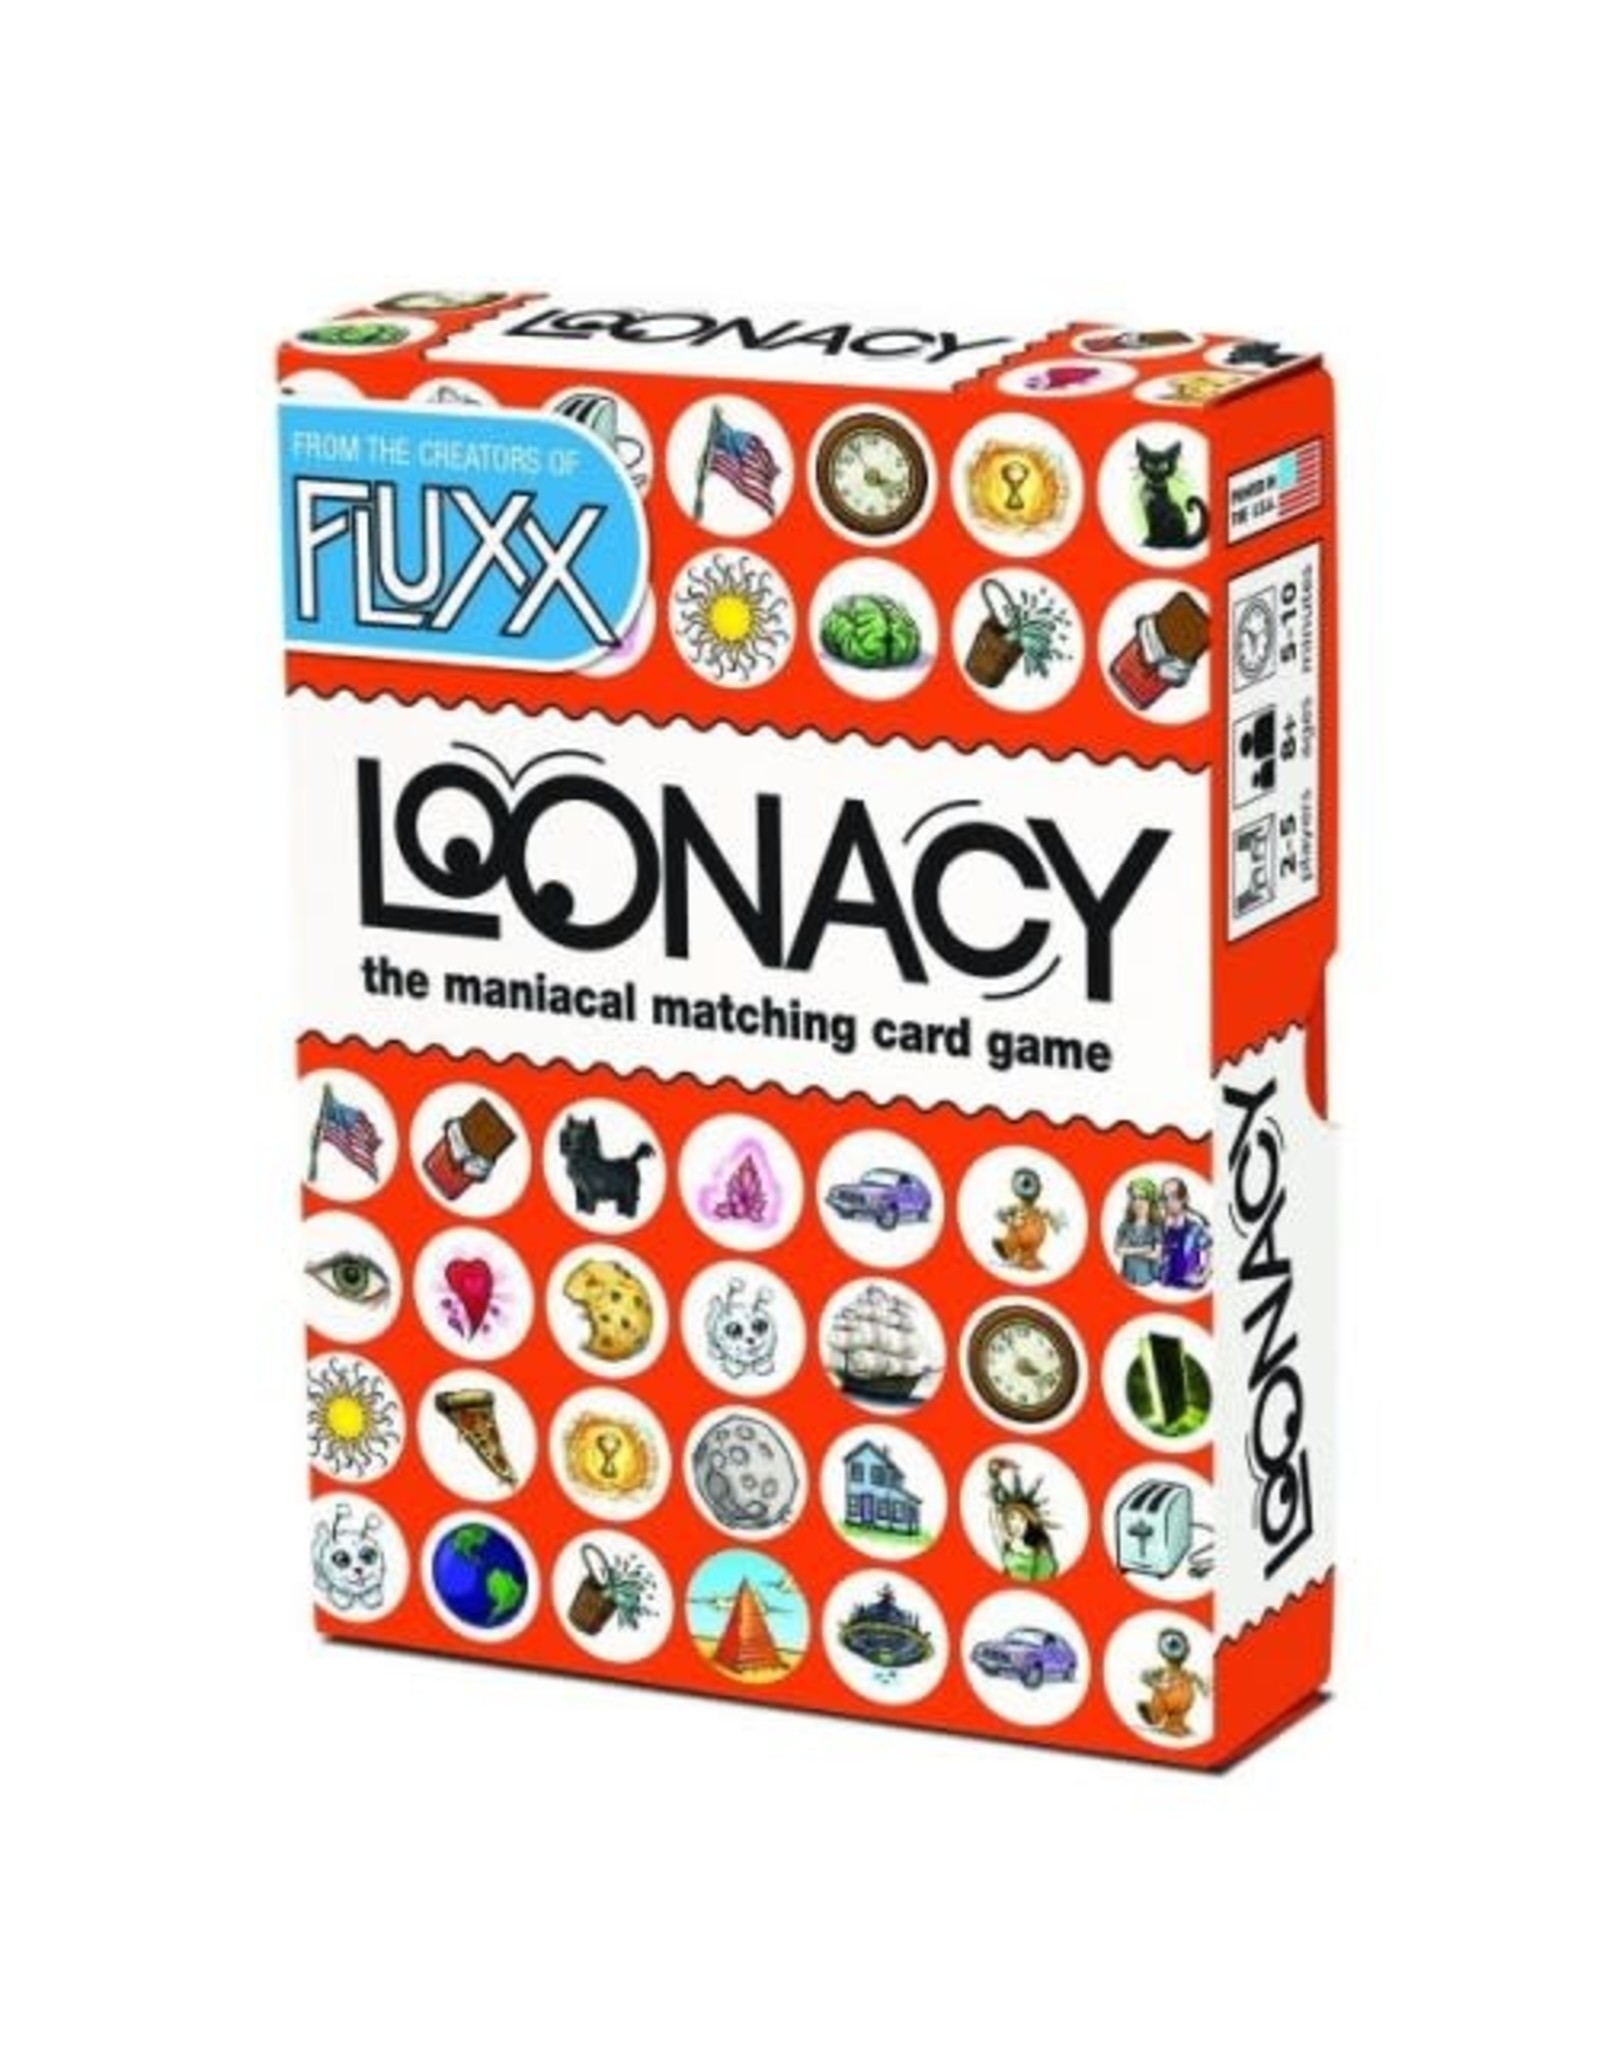 Looney Labs Loonacy